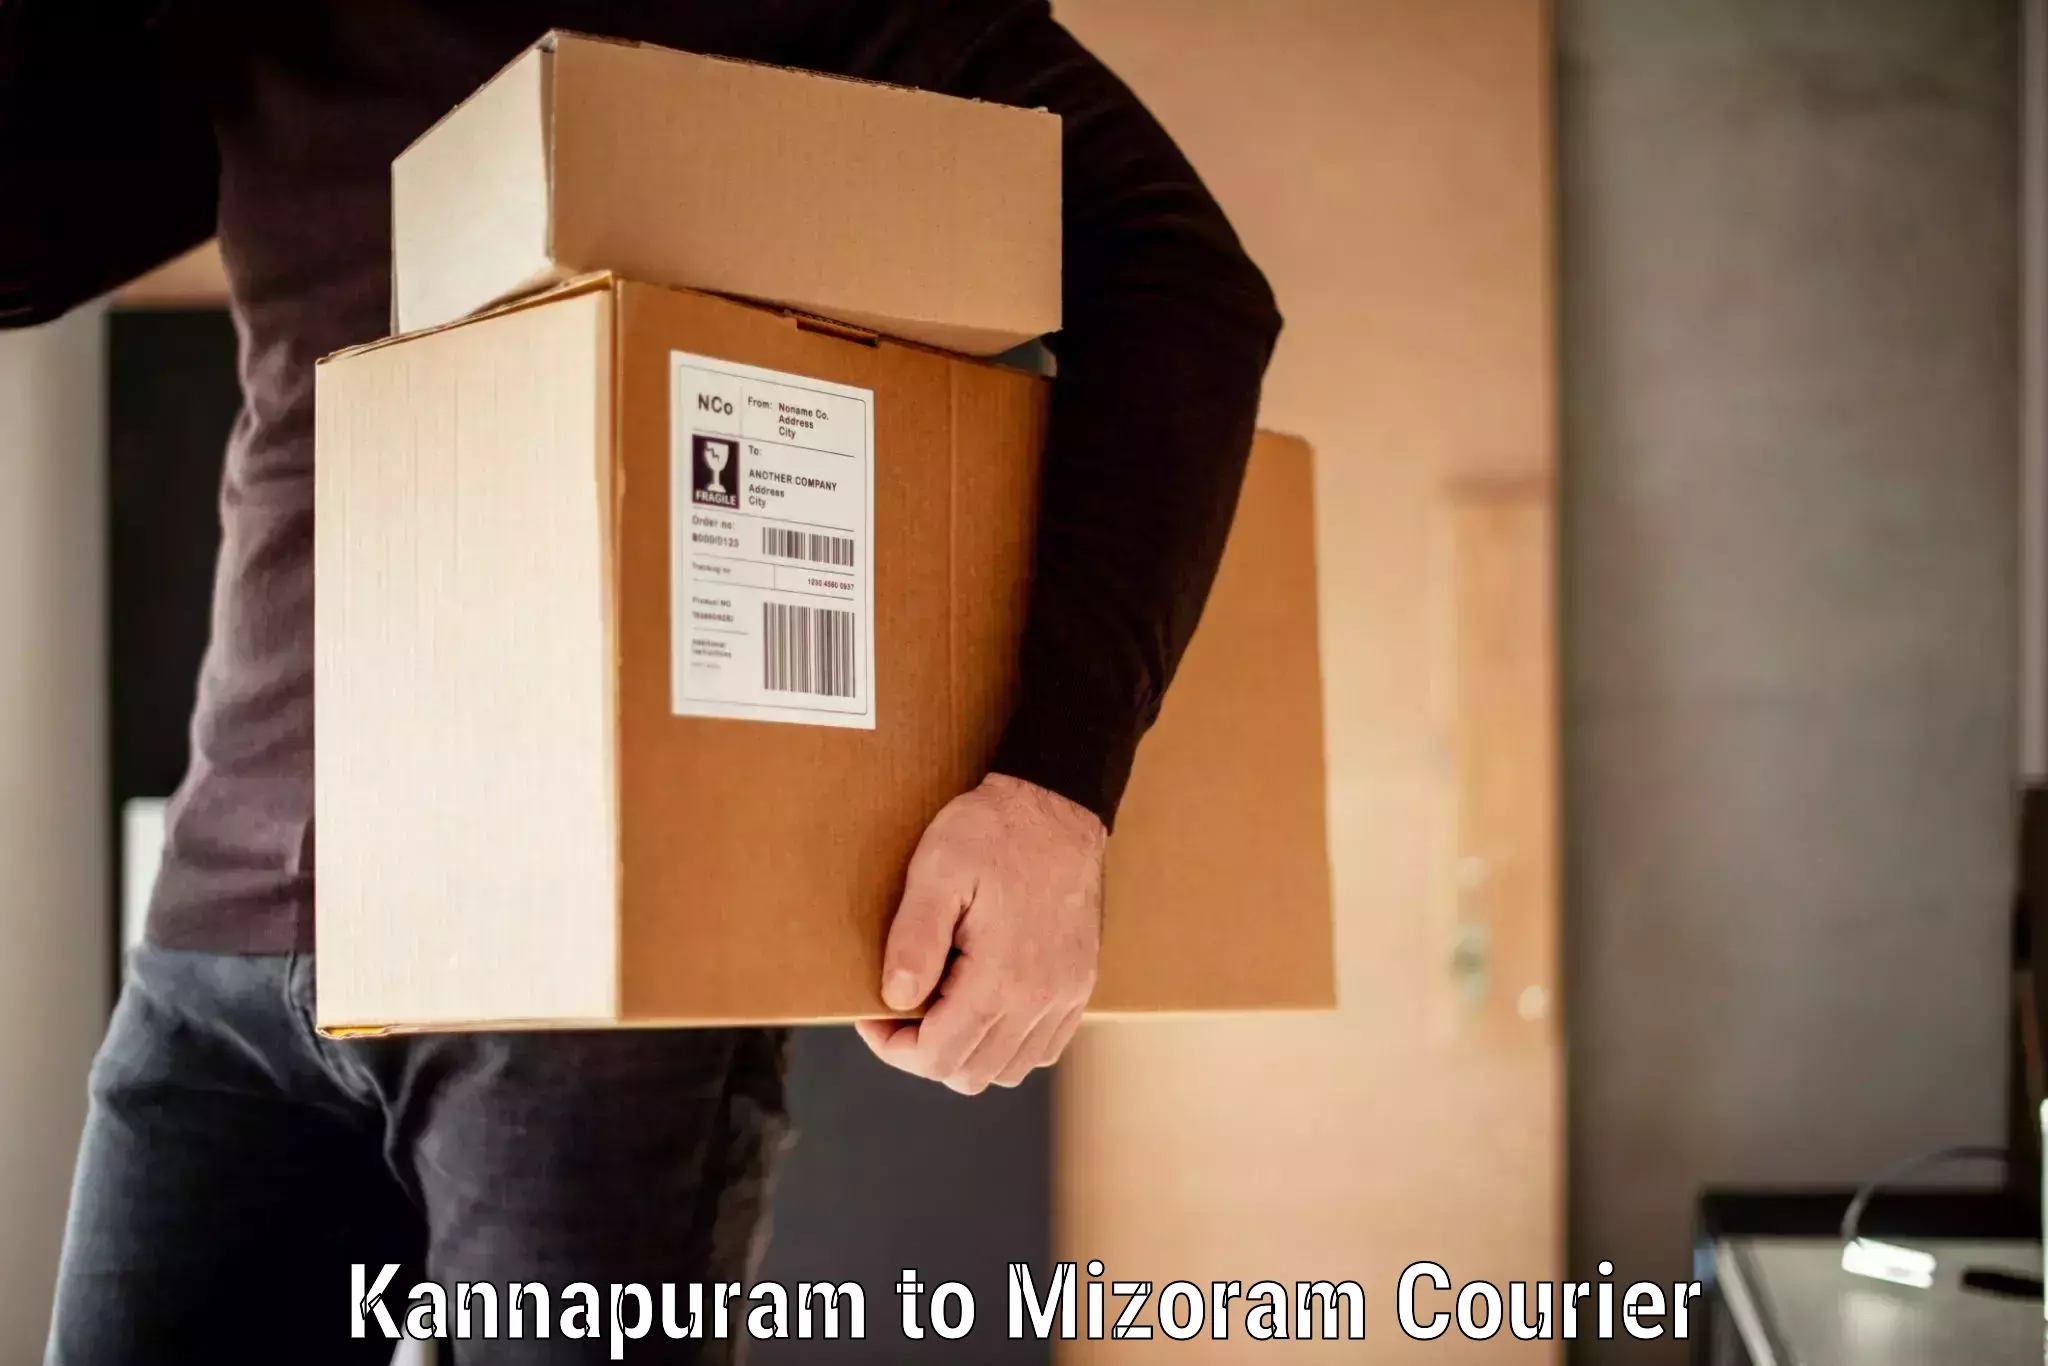 Baggage relocation service Kannapuram to Mamit